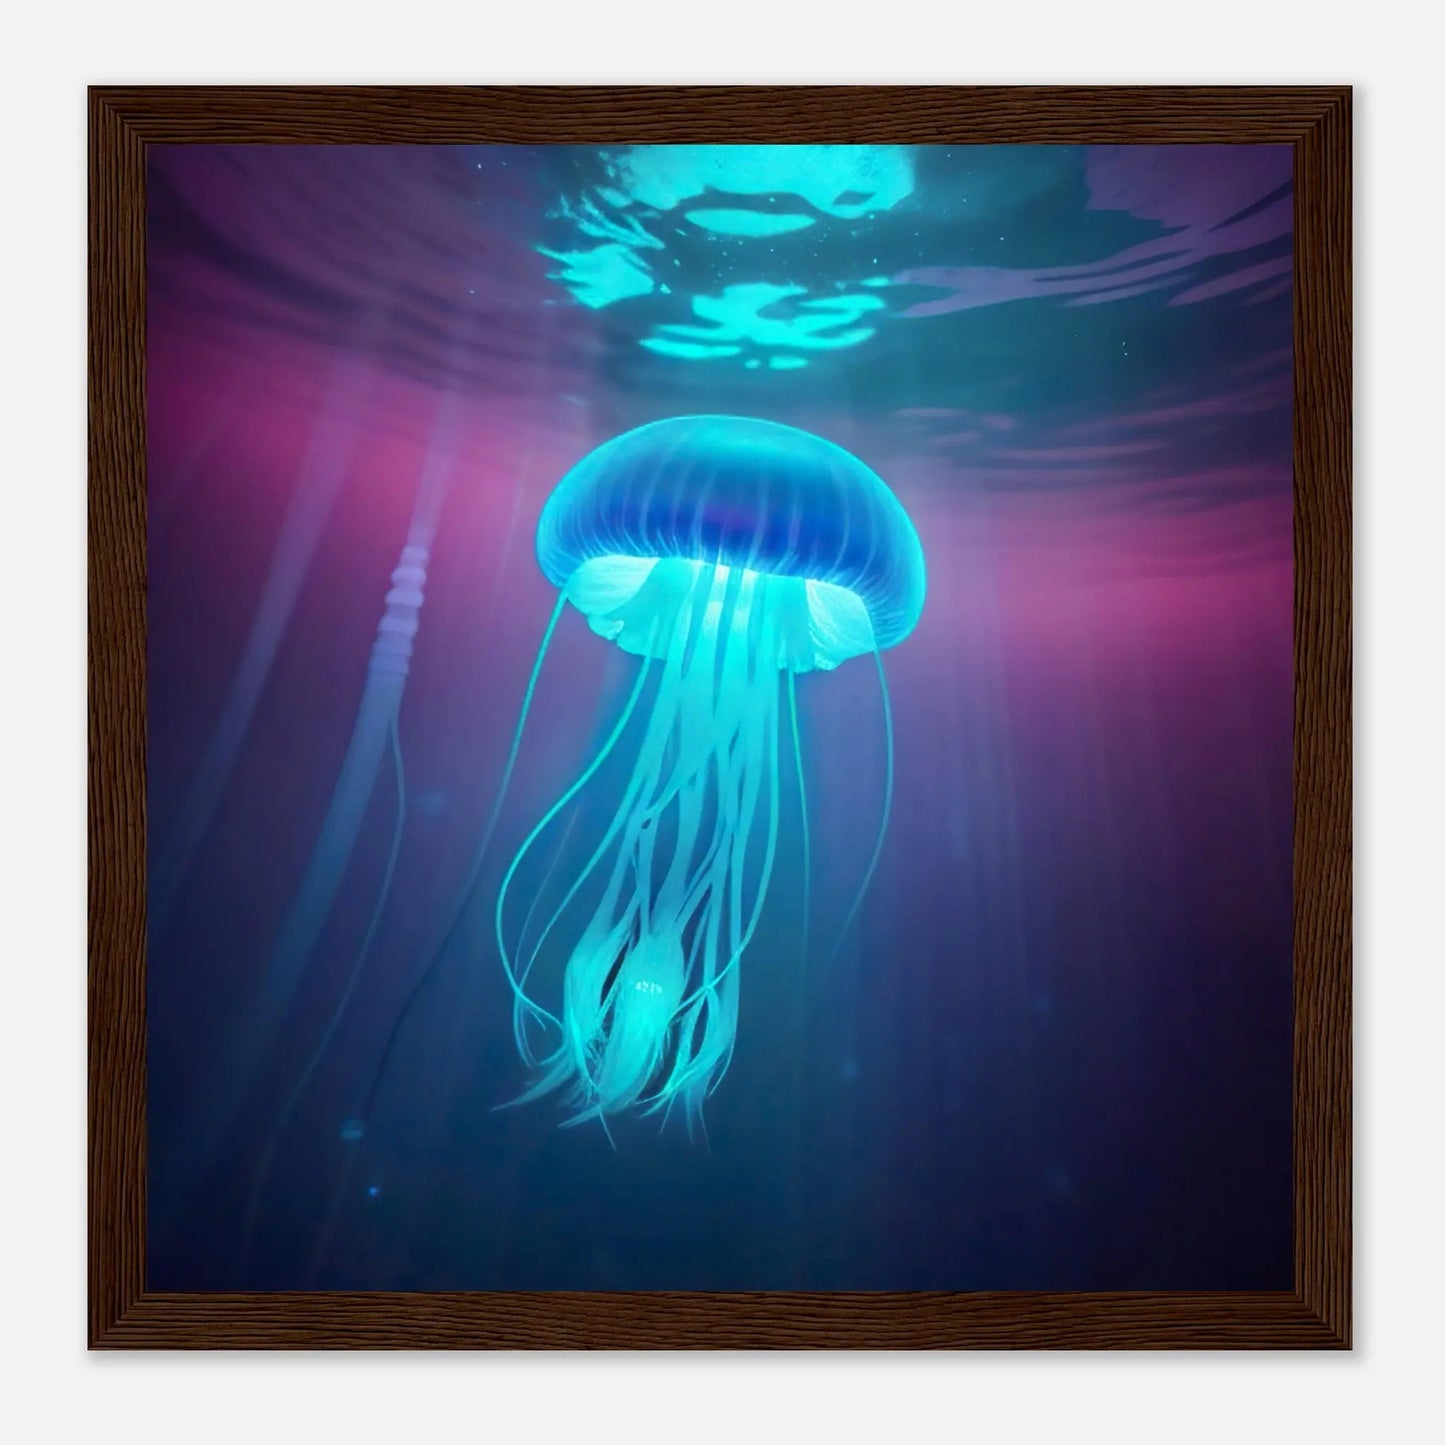 Gerahmtes Premium-Poster - Qualle - Digitaler Stil, KI-Kunst - RolConArt, Unterwasserlandschaften, 30x30-cm-12x12-Dunkler-Holzrahmen